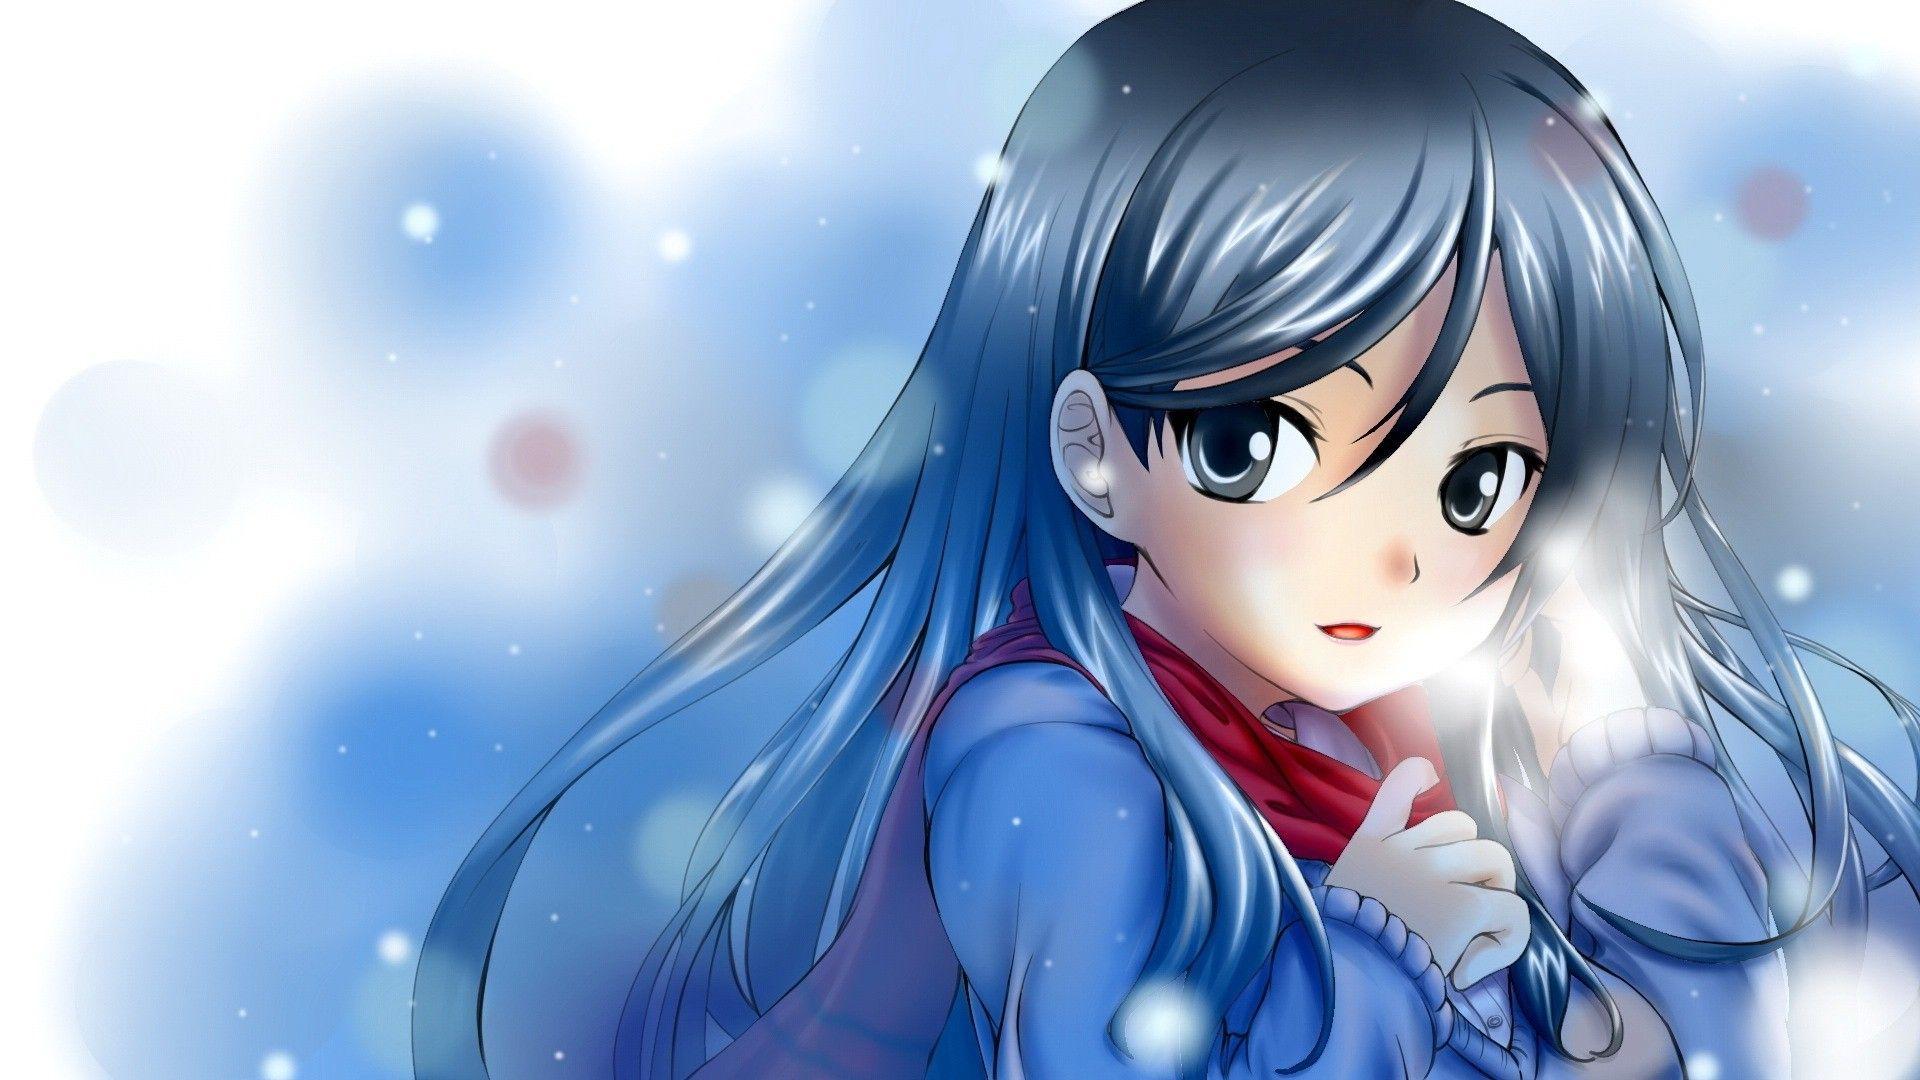 Japanese Cartoon Cute Girly Wallpapers - Top Free Japanese ...